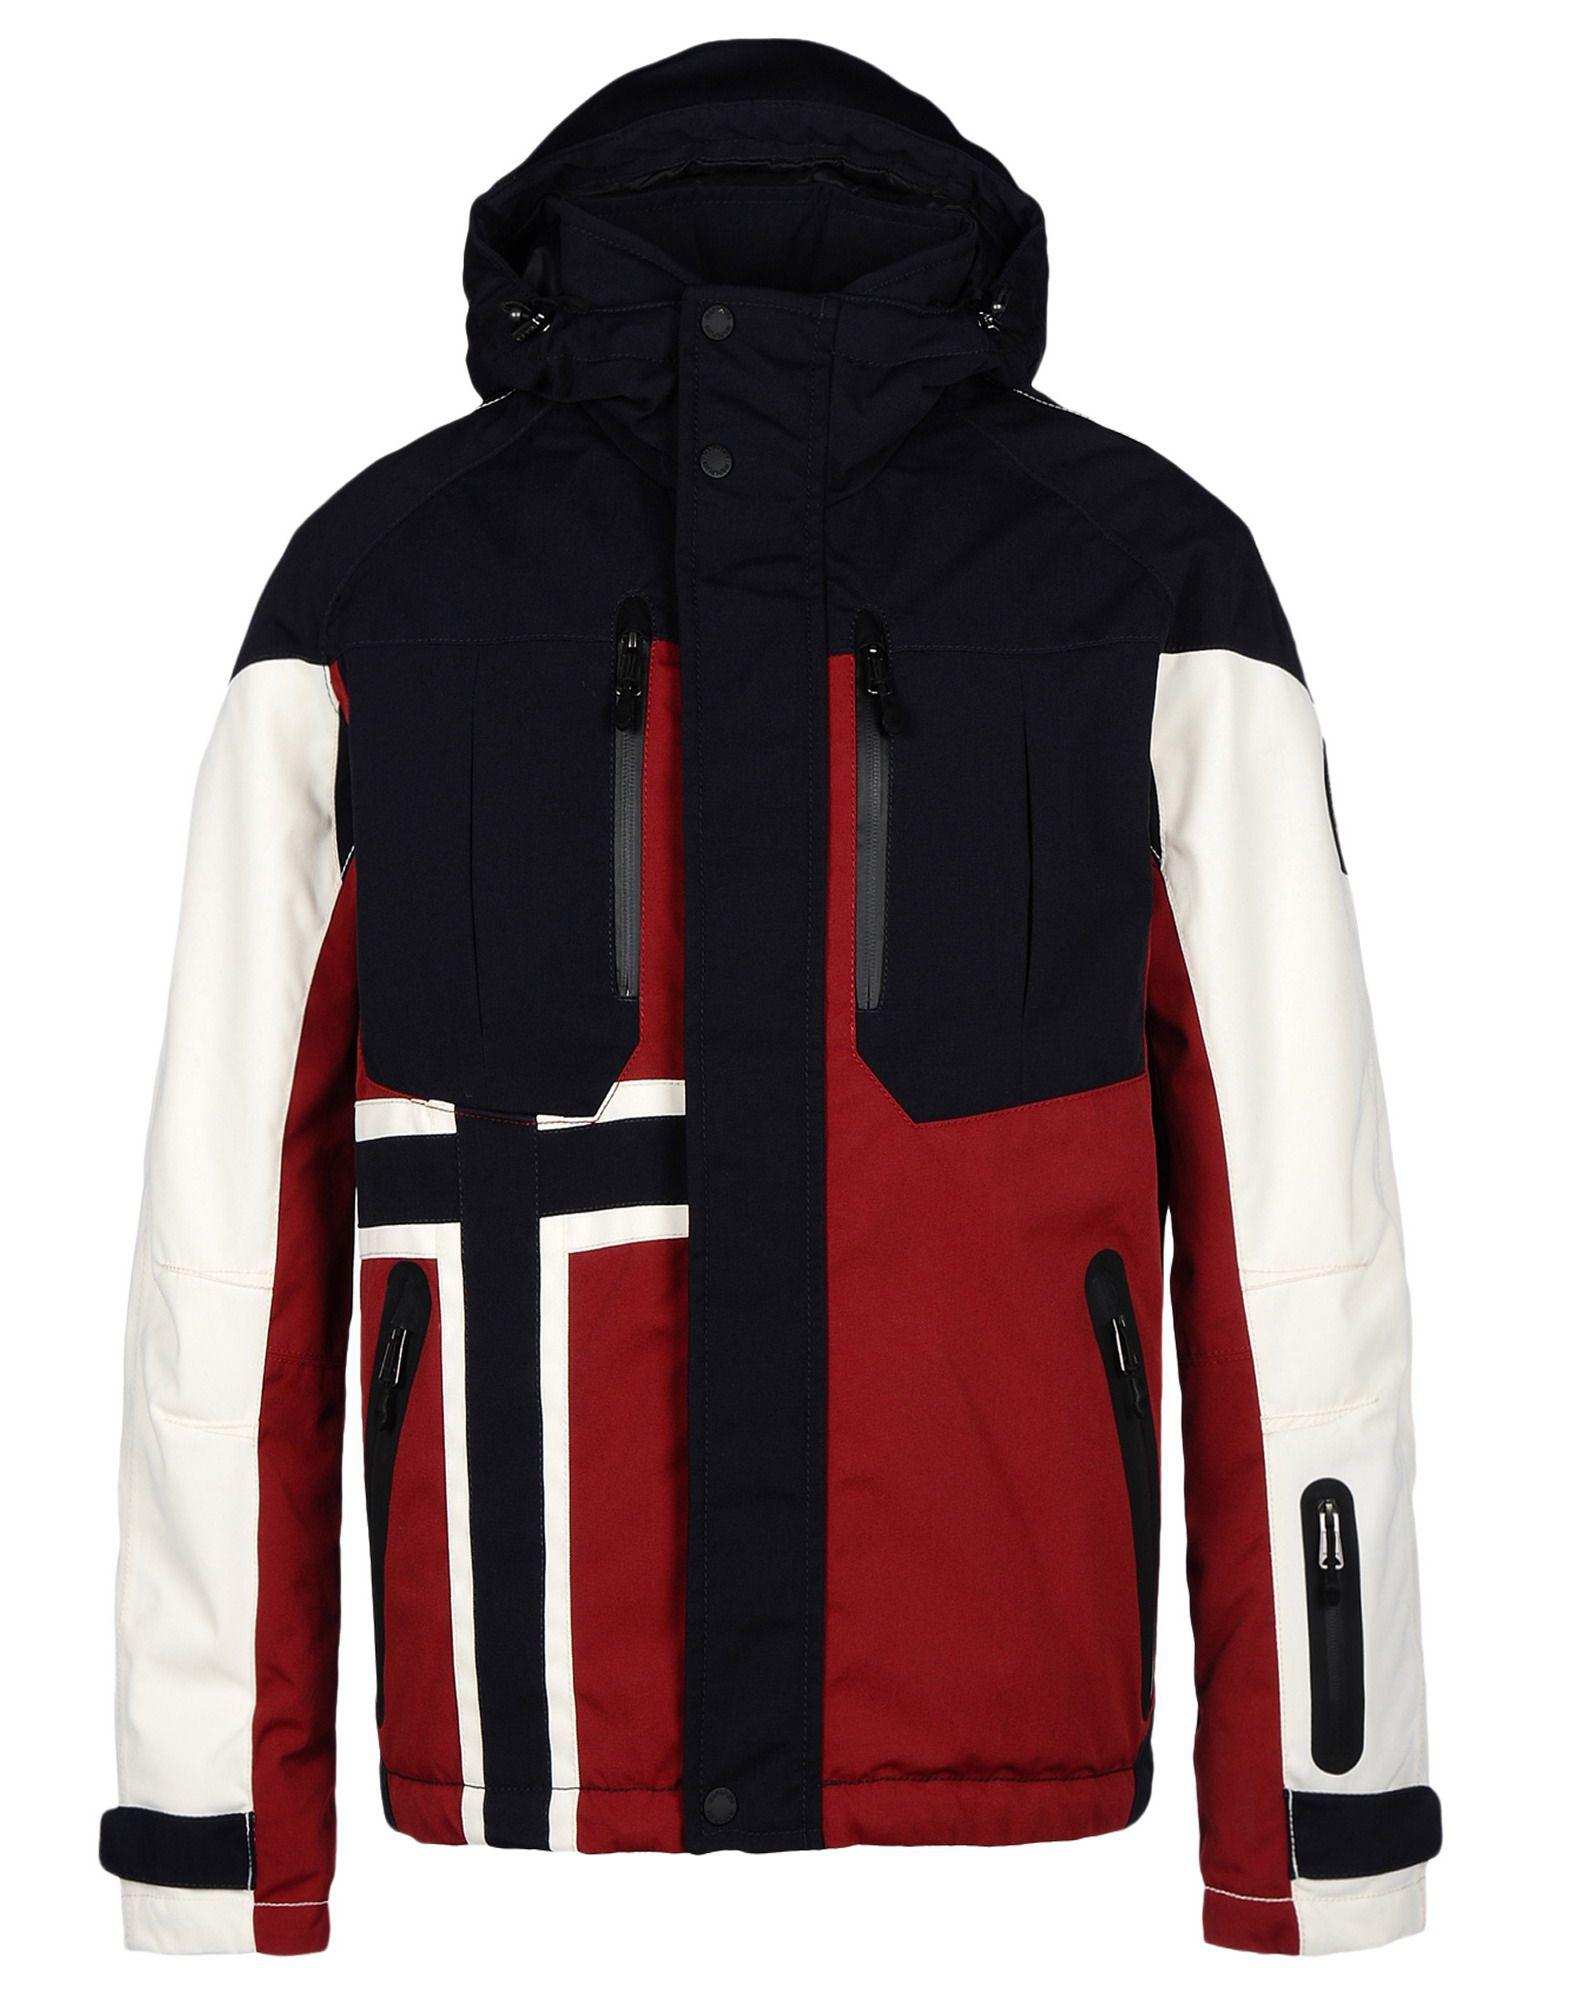 Napapijri Fleece Ski Jacket in Red for Men - Lyst